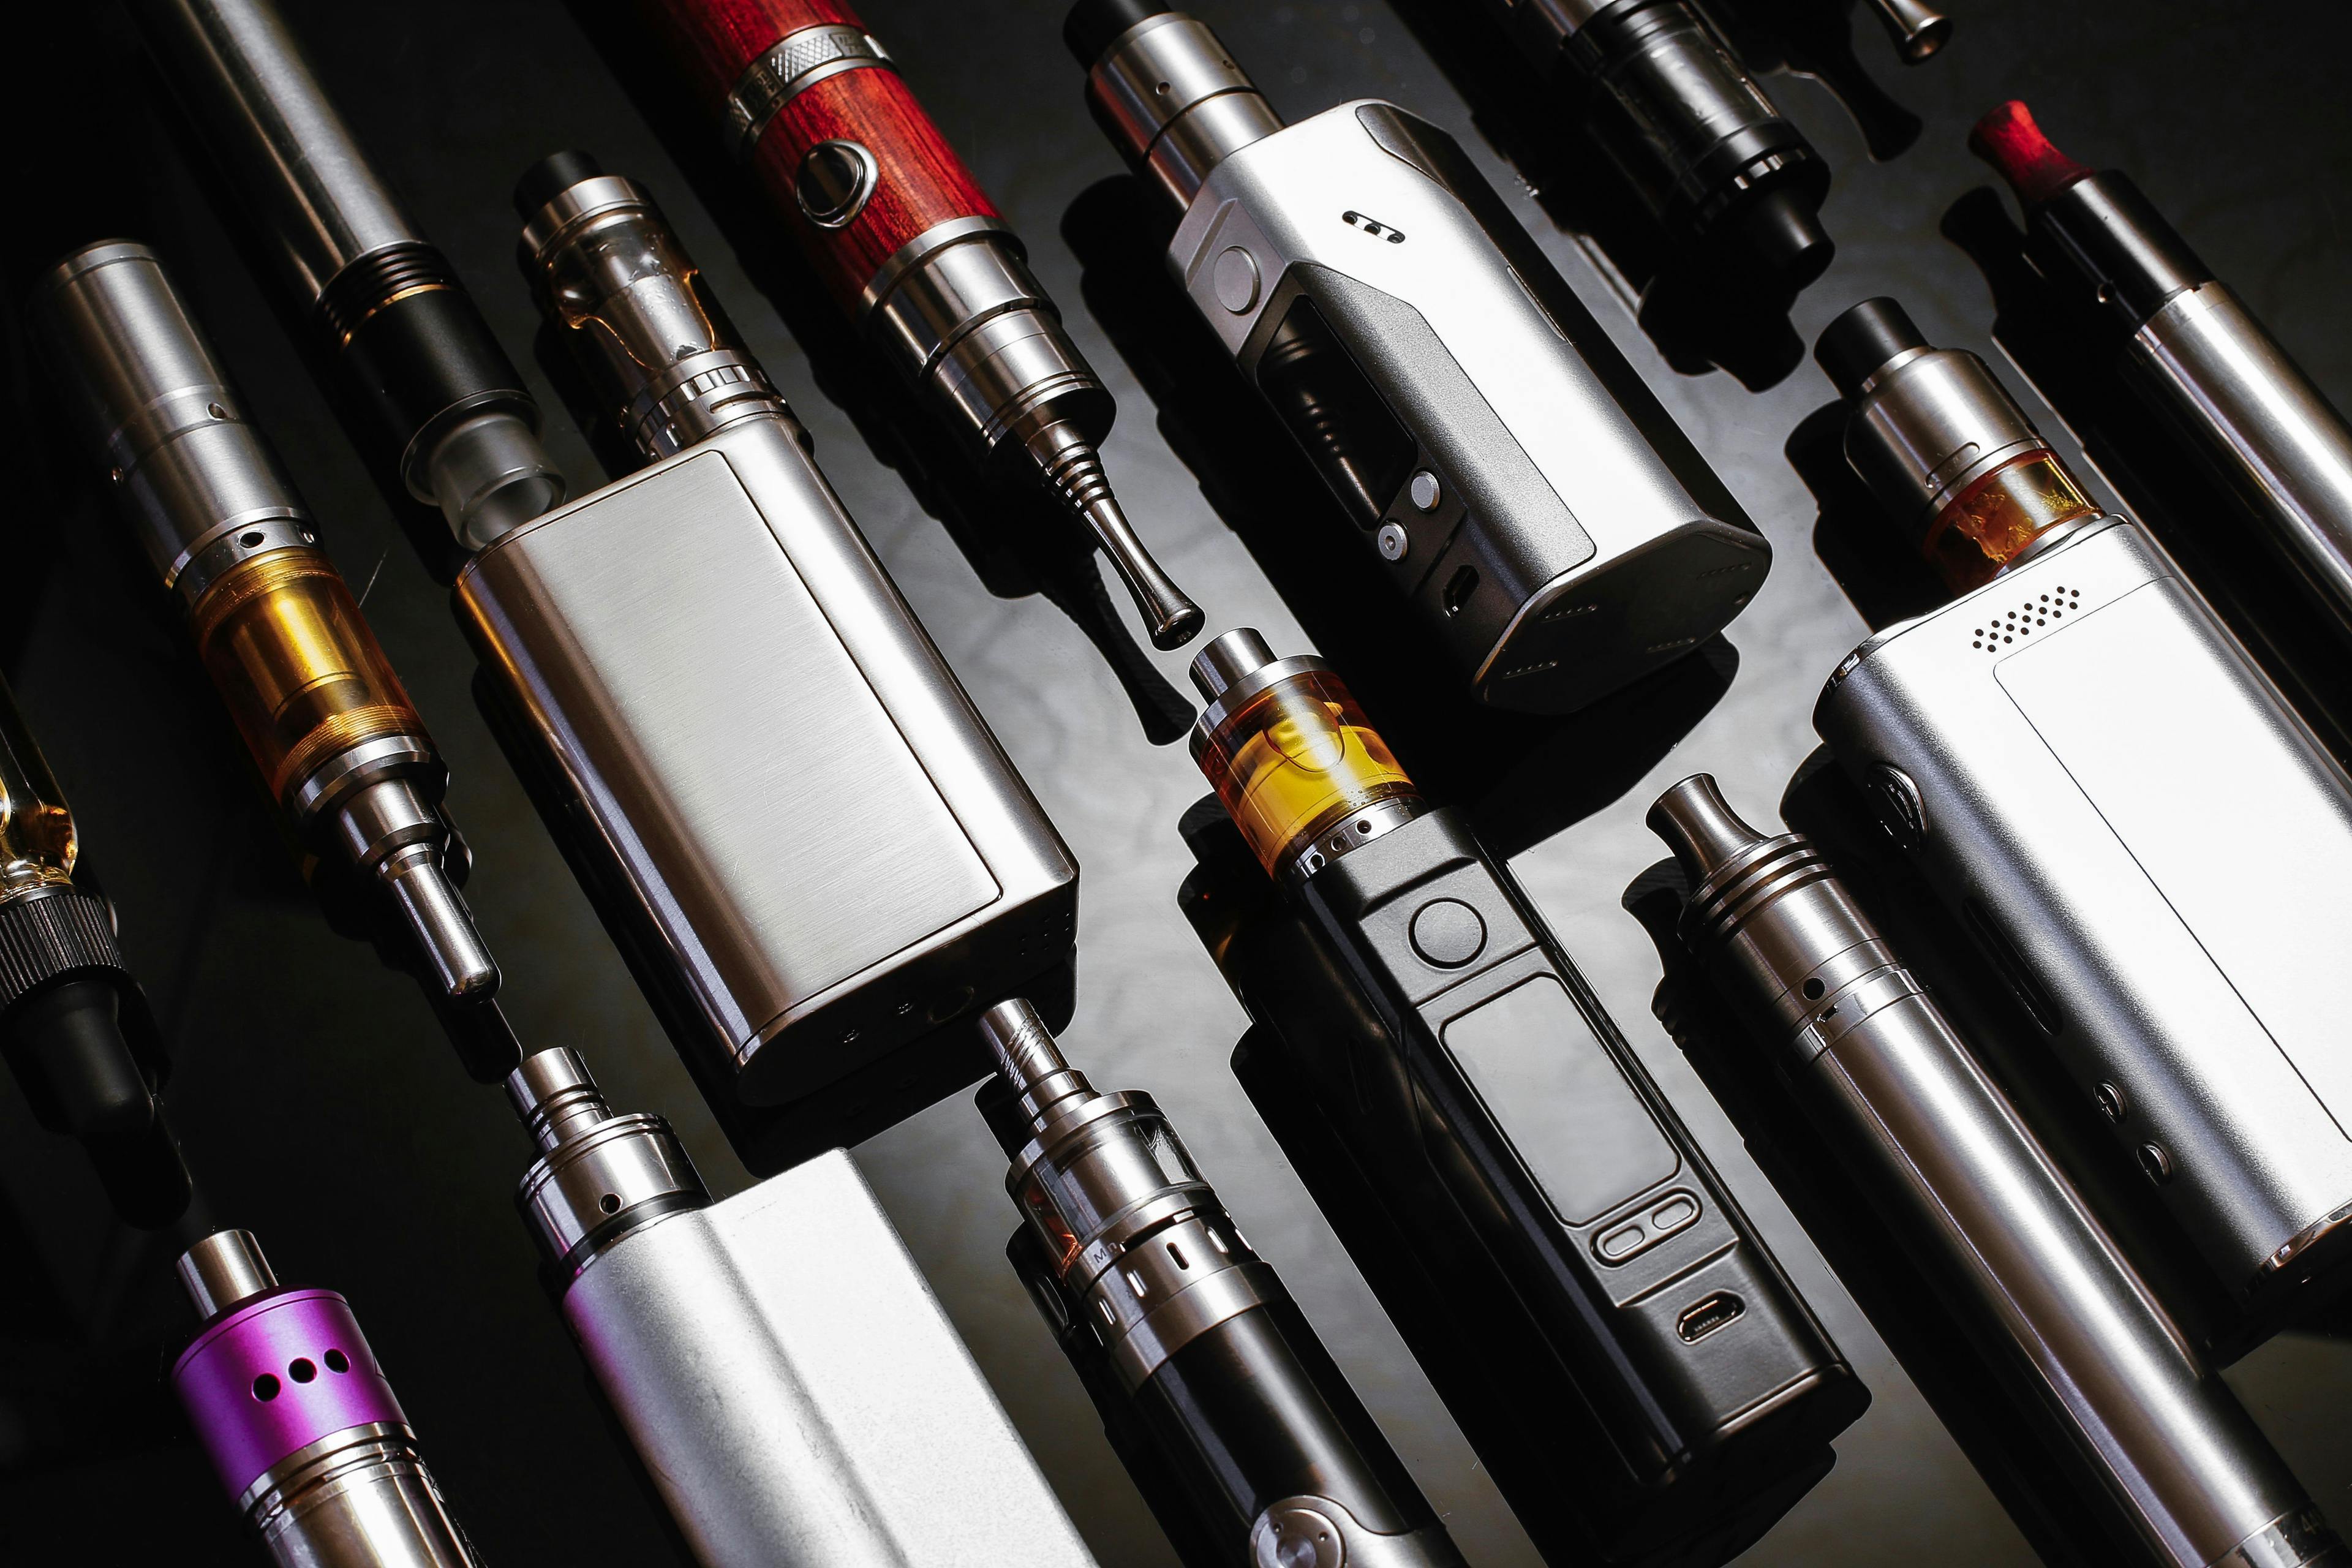 AAP president responds to FDA's marketing authorization of menthol-flavored e-cigarettes | Image Credit: © lezinav - © lezinav - stock.adobe.com.